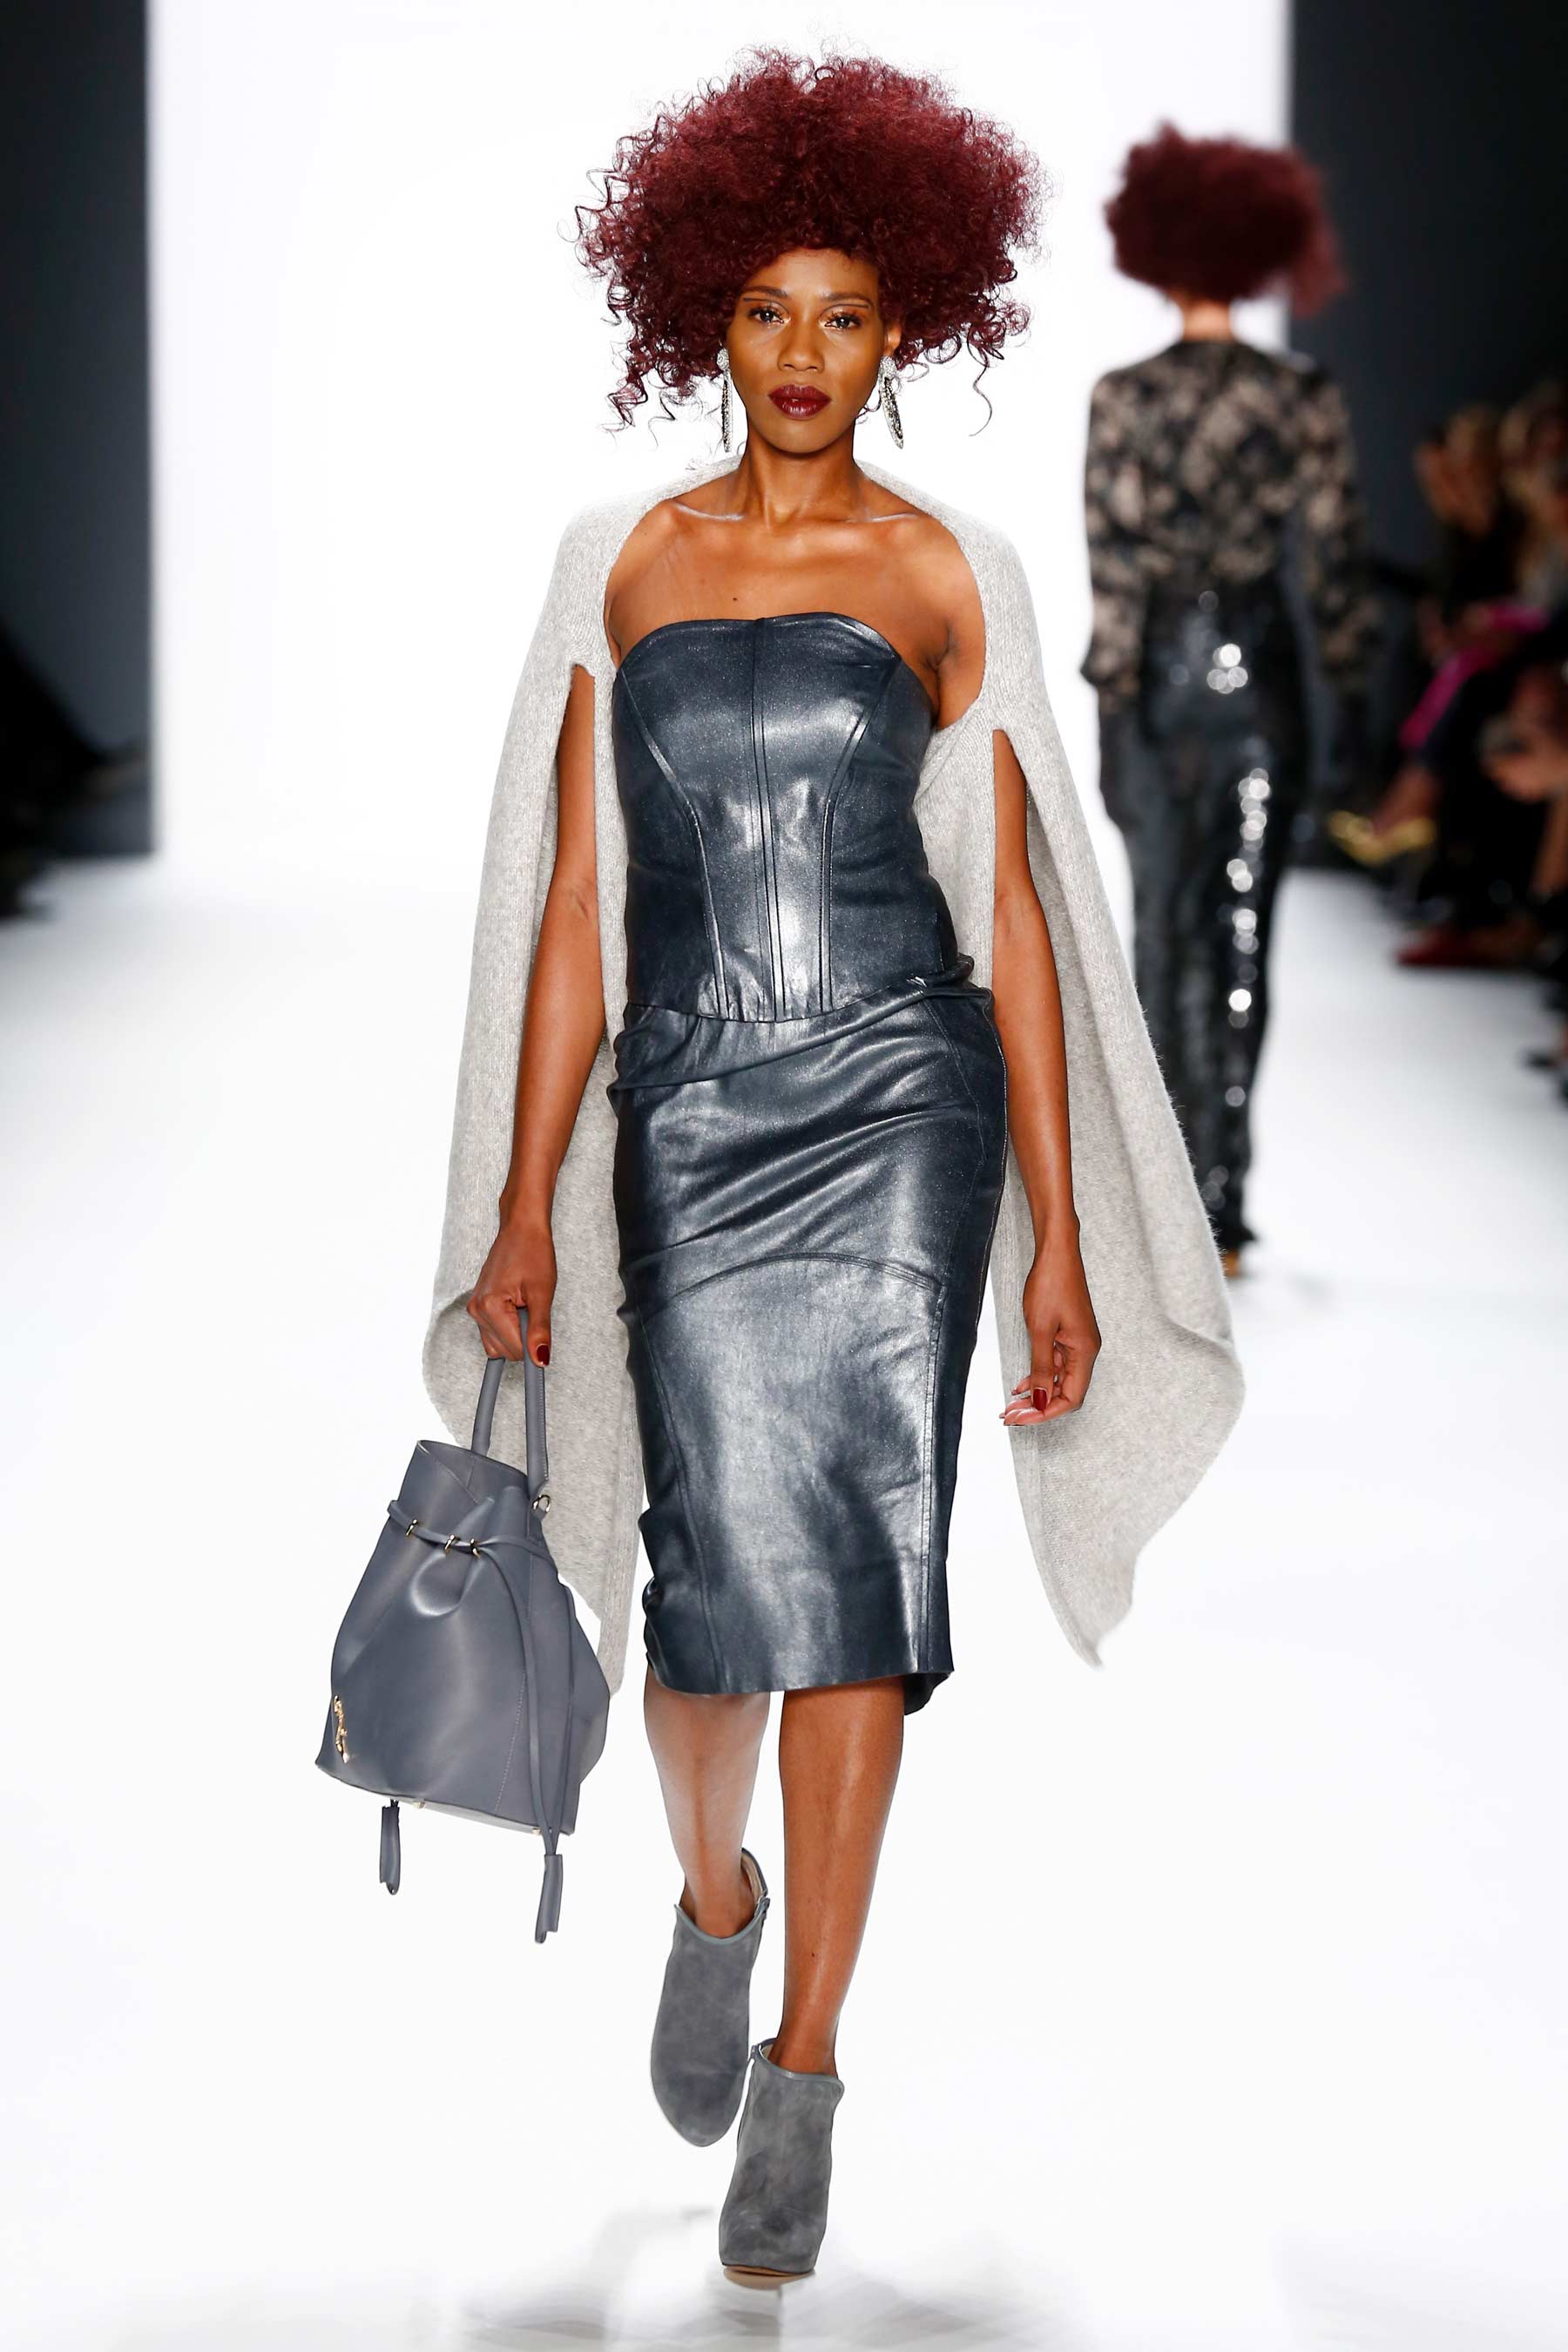 Models walk the runway at the Mercedes-Benz Fashion Week Berlin